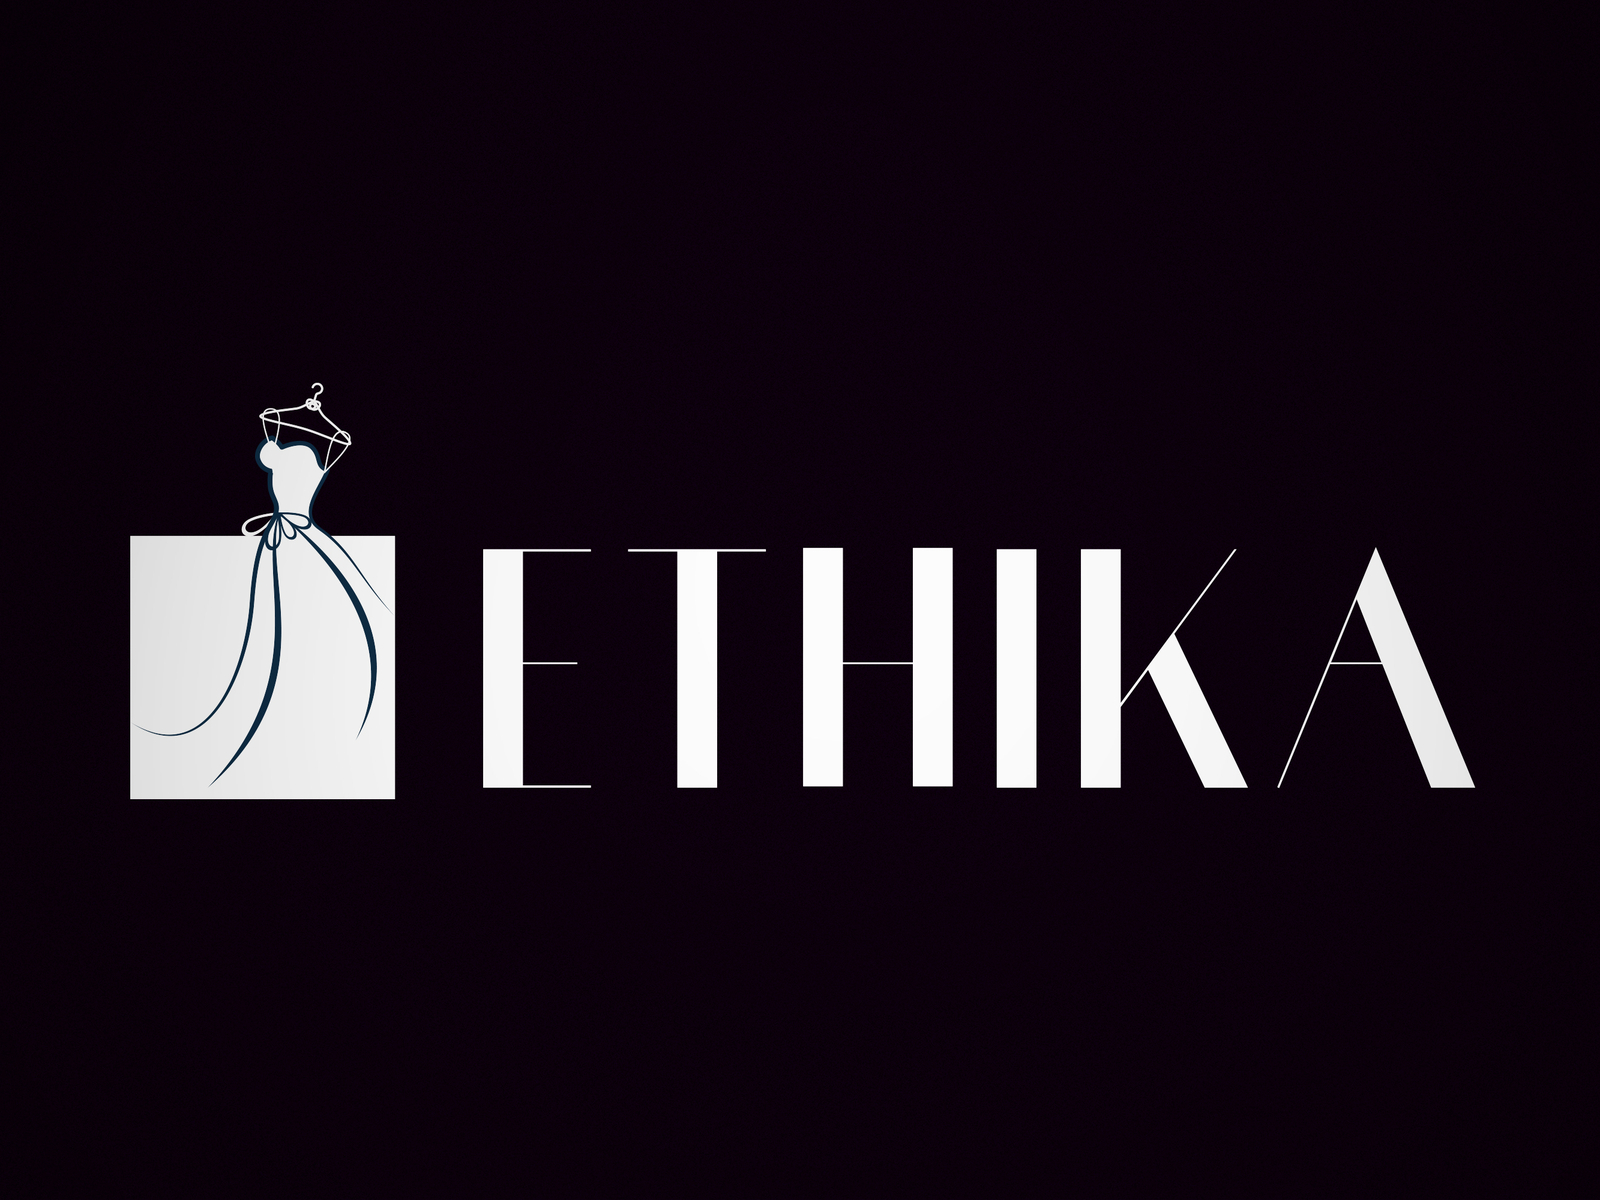 ethika logo by kaushik barvaliya on Dribbble